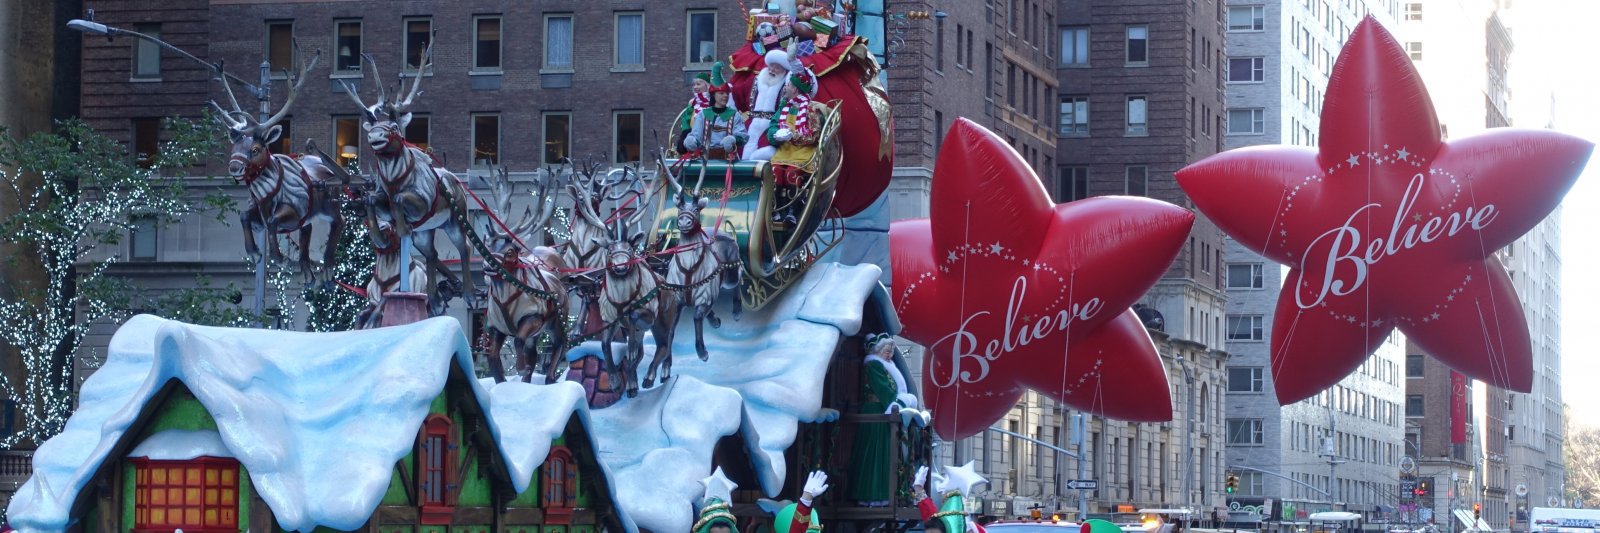 Santa Claus float in parade